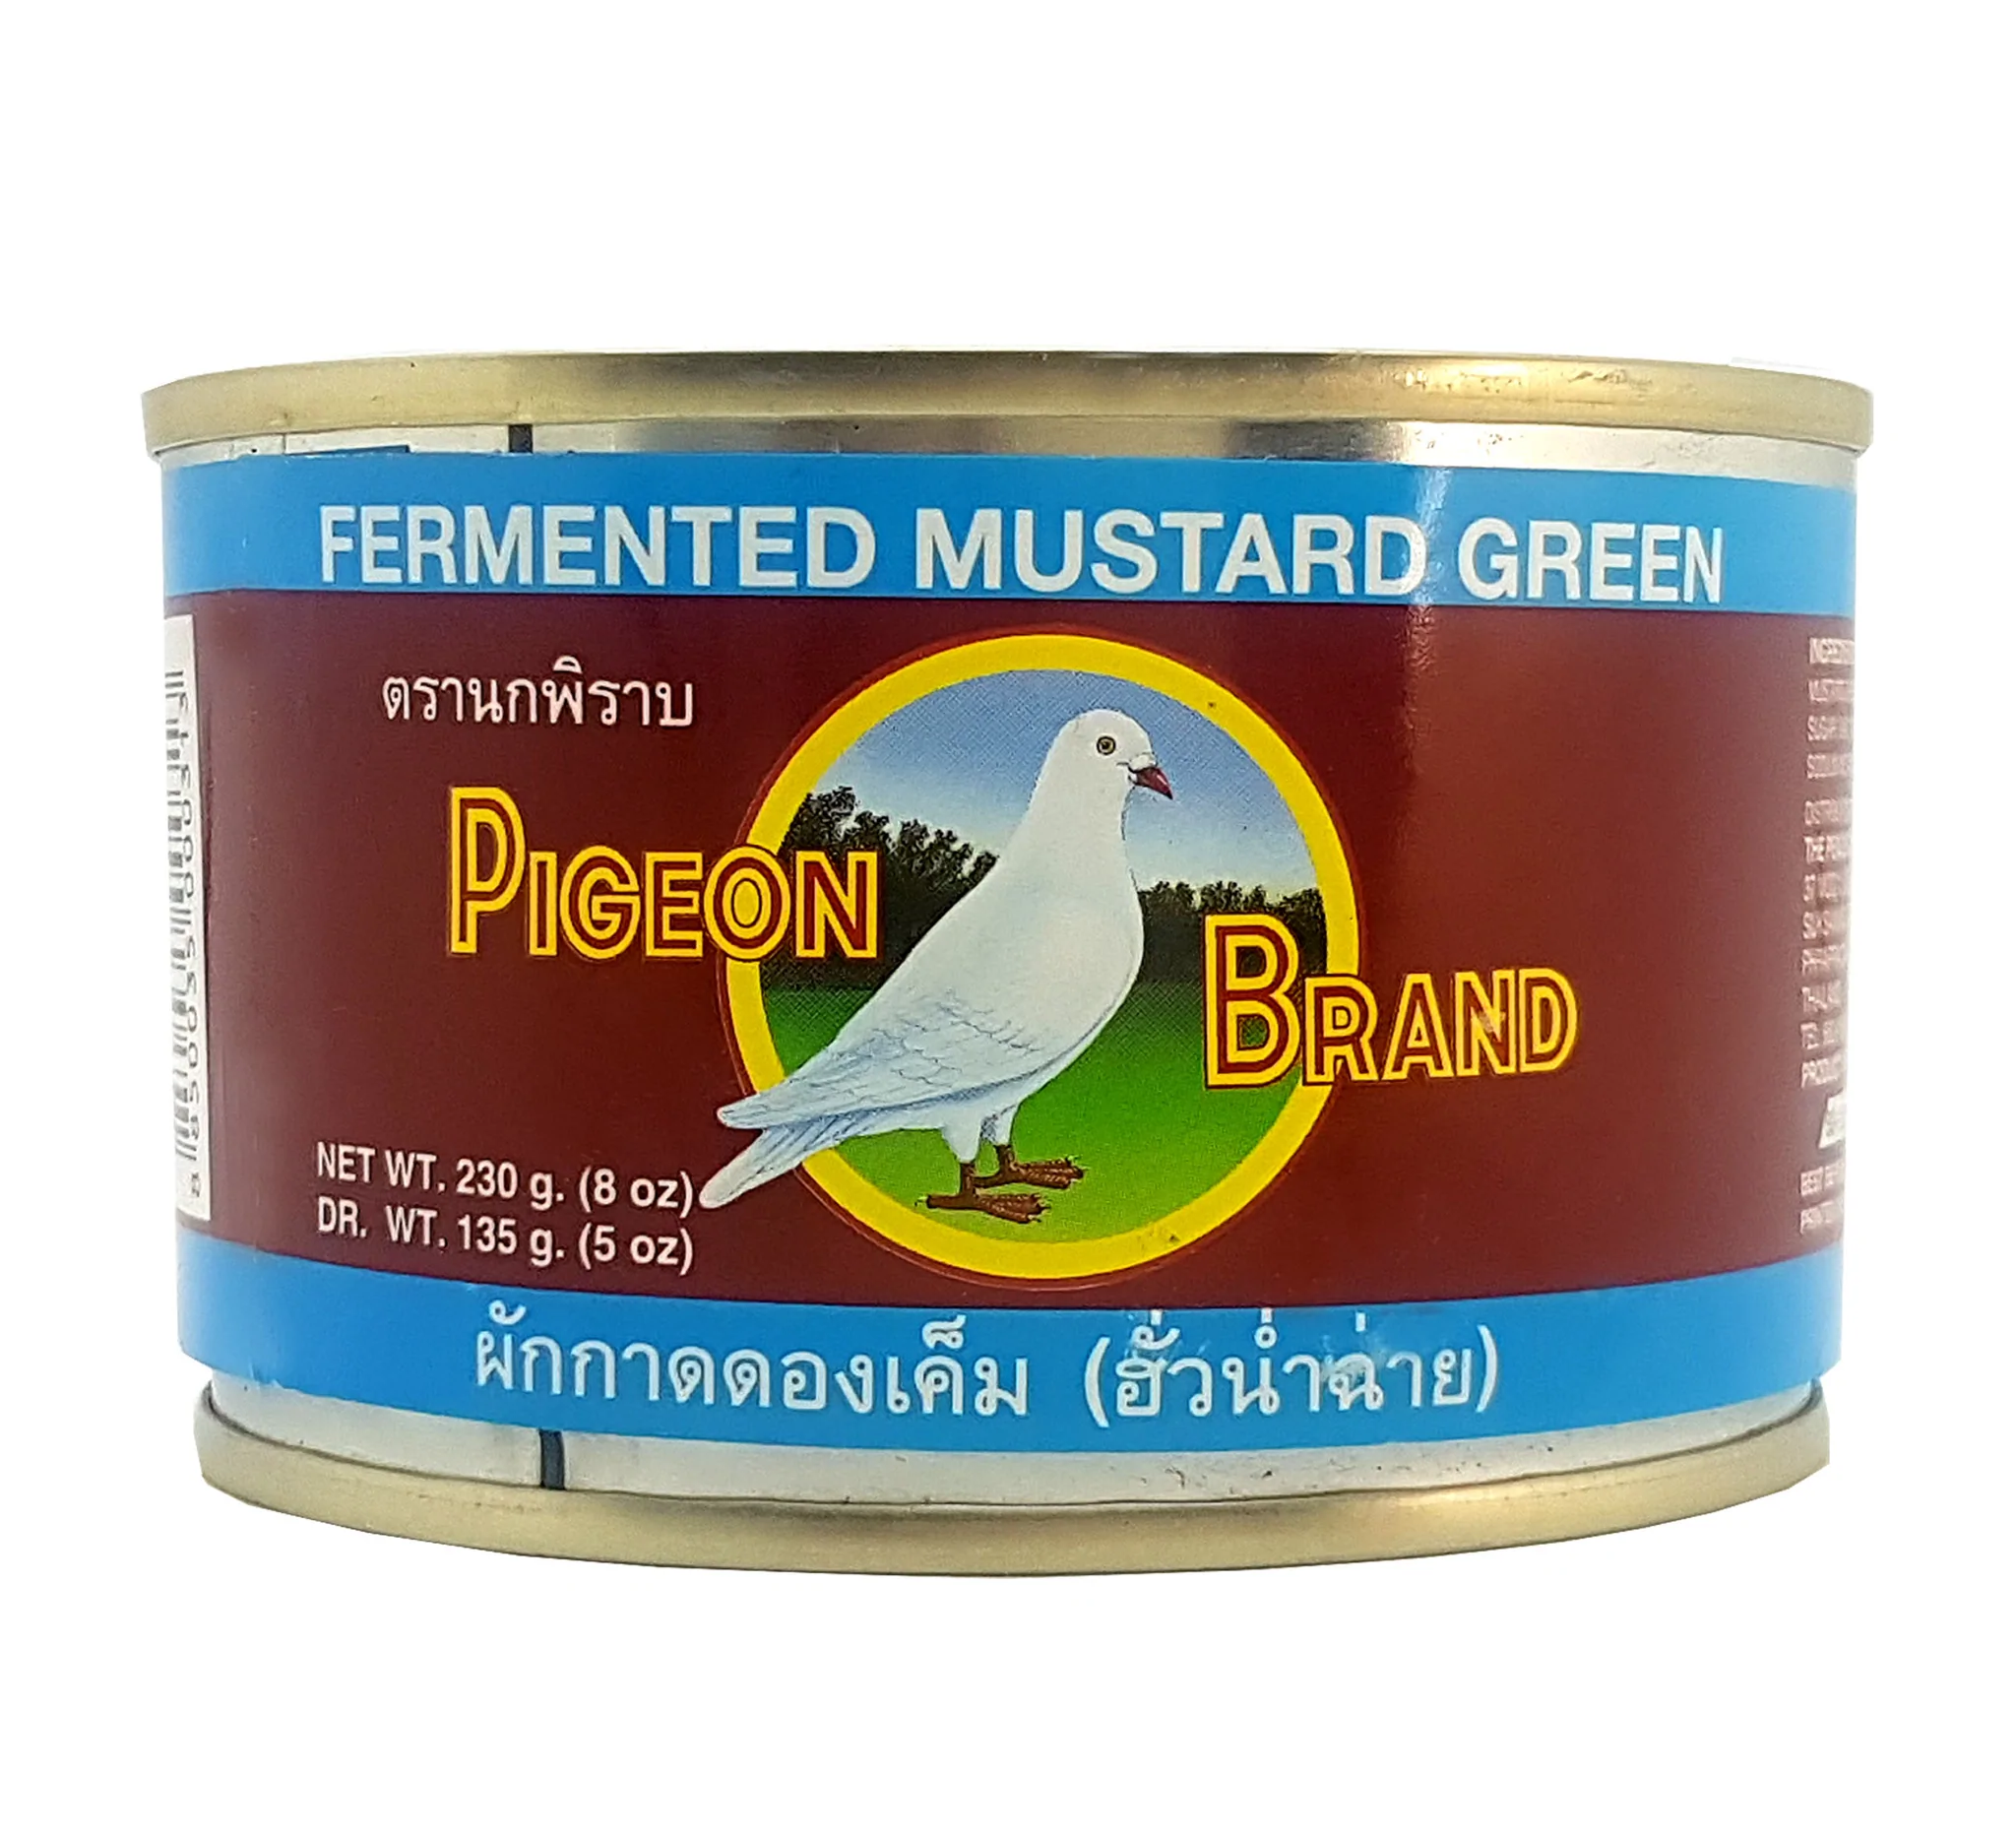 Pigeon Brand Fermented Mustard Green Pickled Thai Style 230 g. ผักกากดองเค็ม